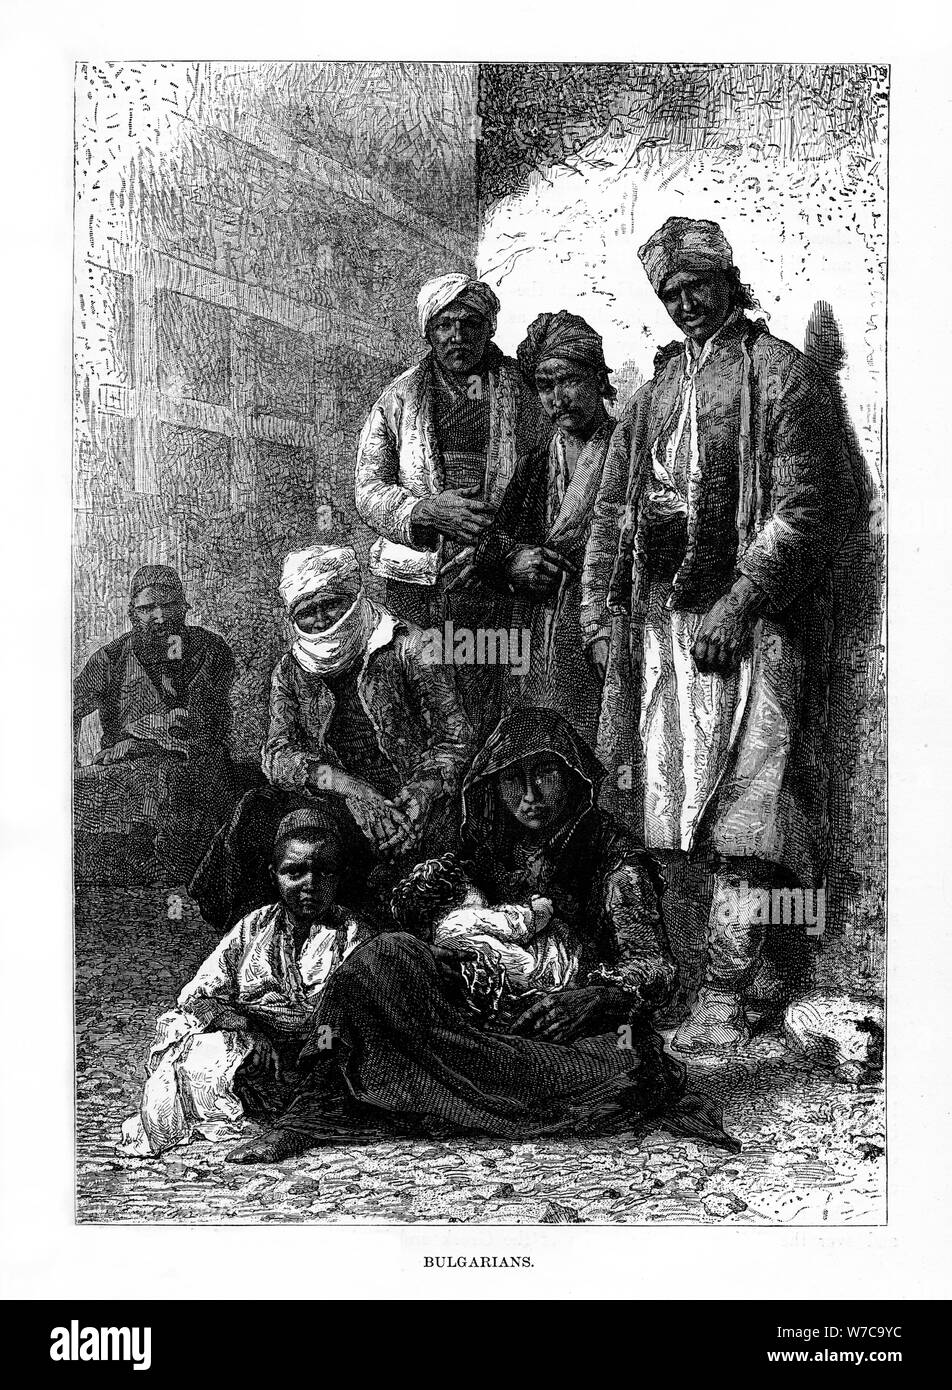 Bulgarians, 19th century. Artist: Unknown Stock Photo